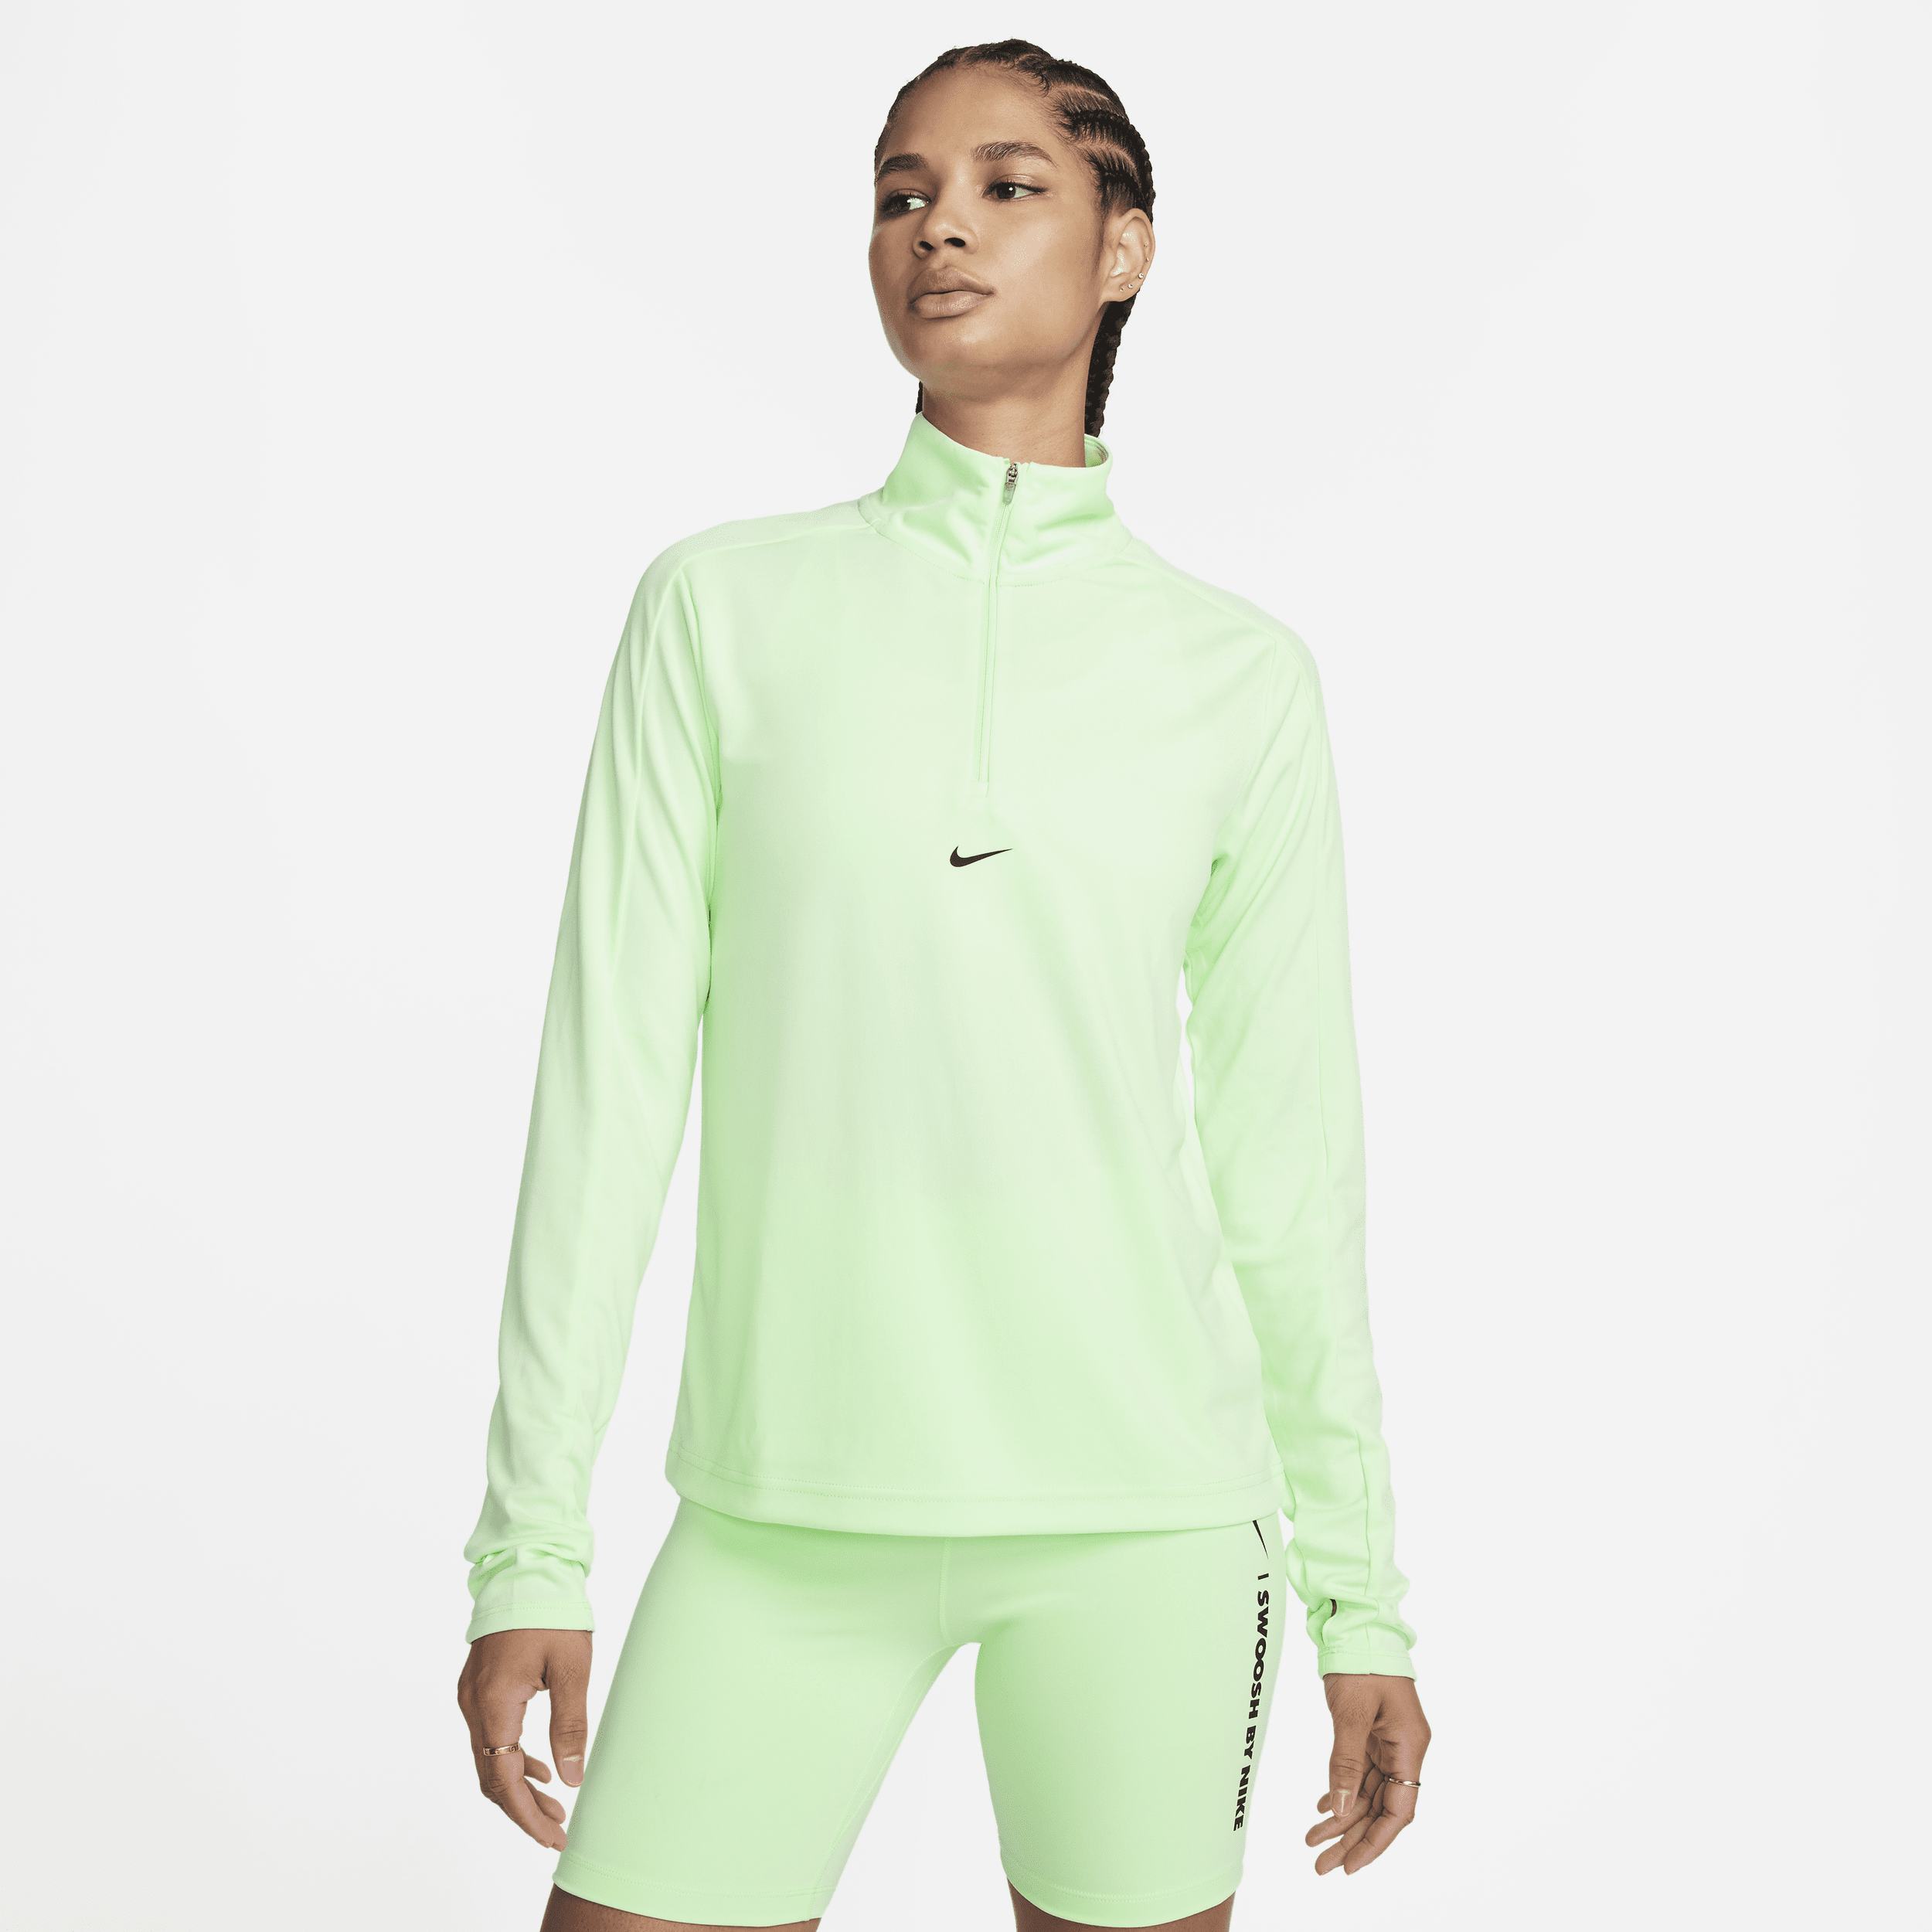 Nike Pacer Dri-FIT damestrui met korte rits - Groen